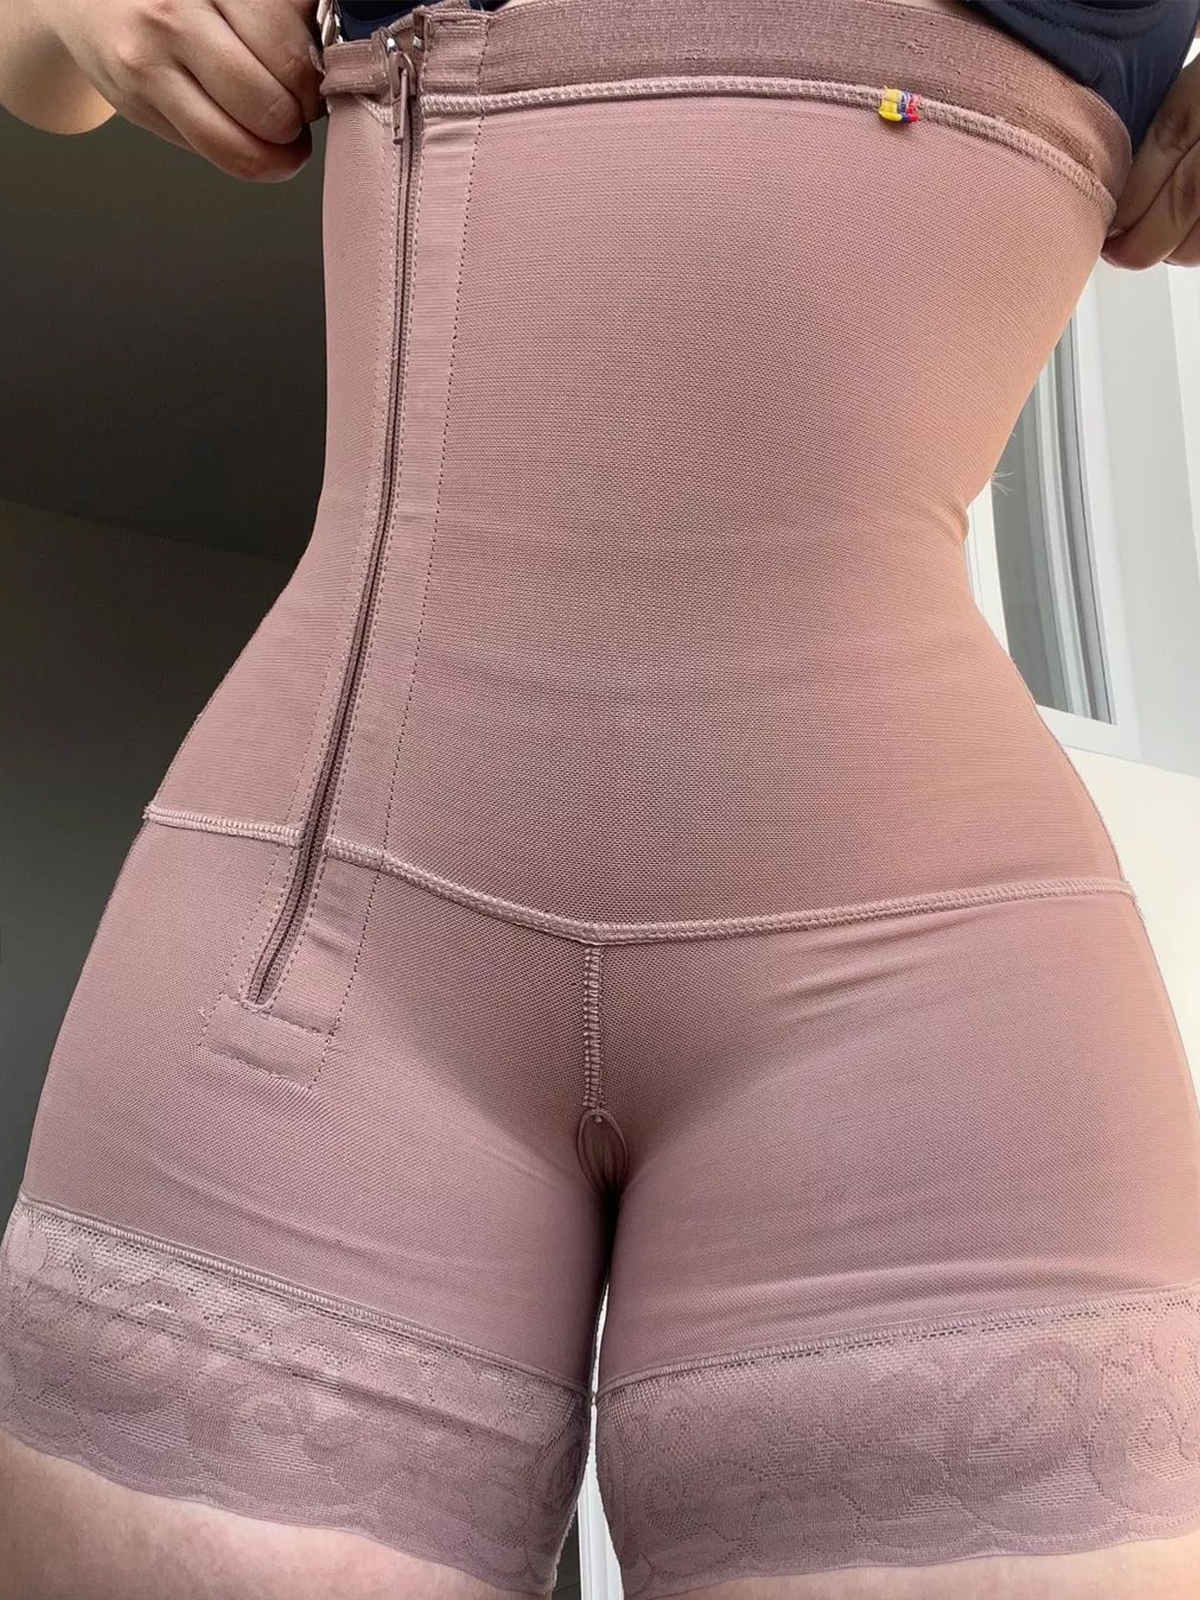 Fajas Colombianas High Waist Butt Lift Body Shaper Belly Control Panties